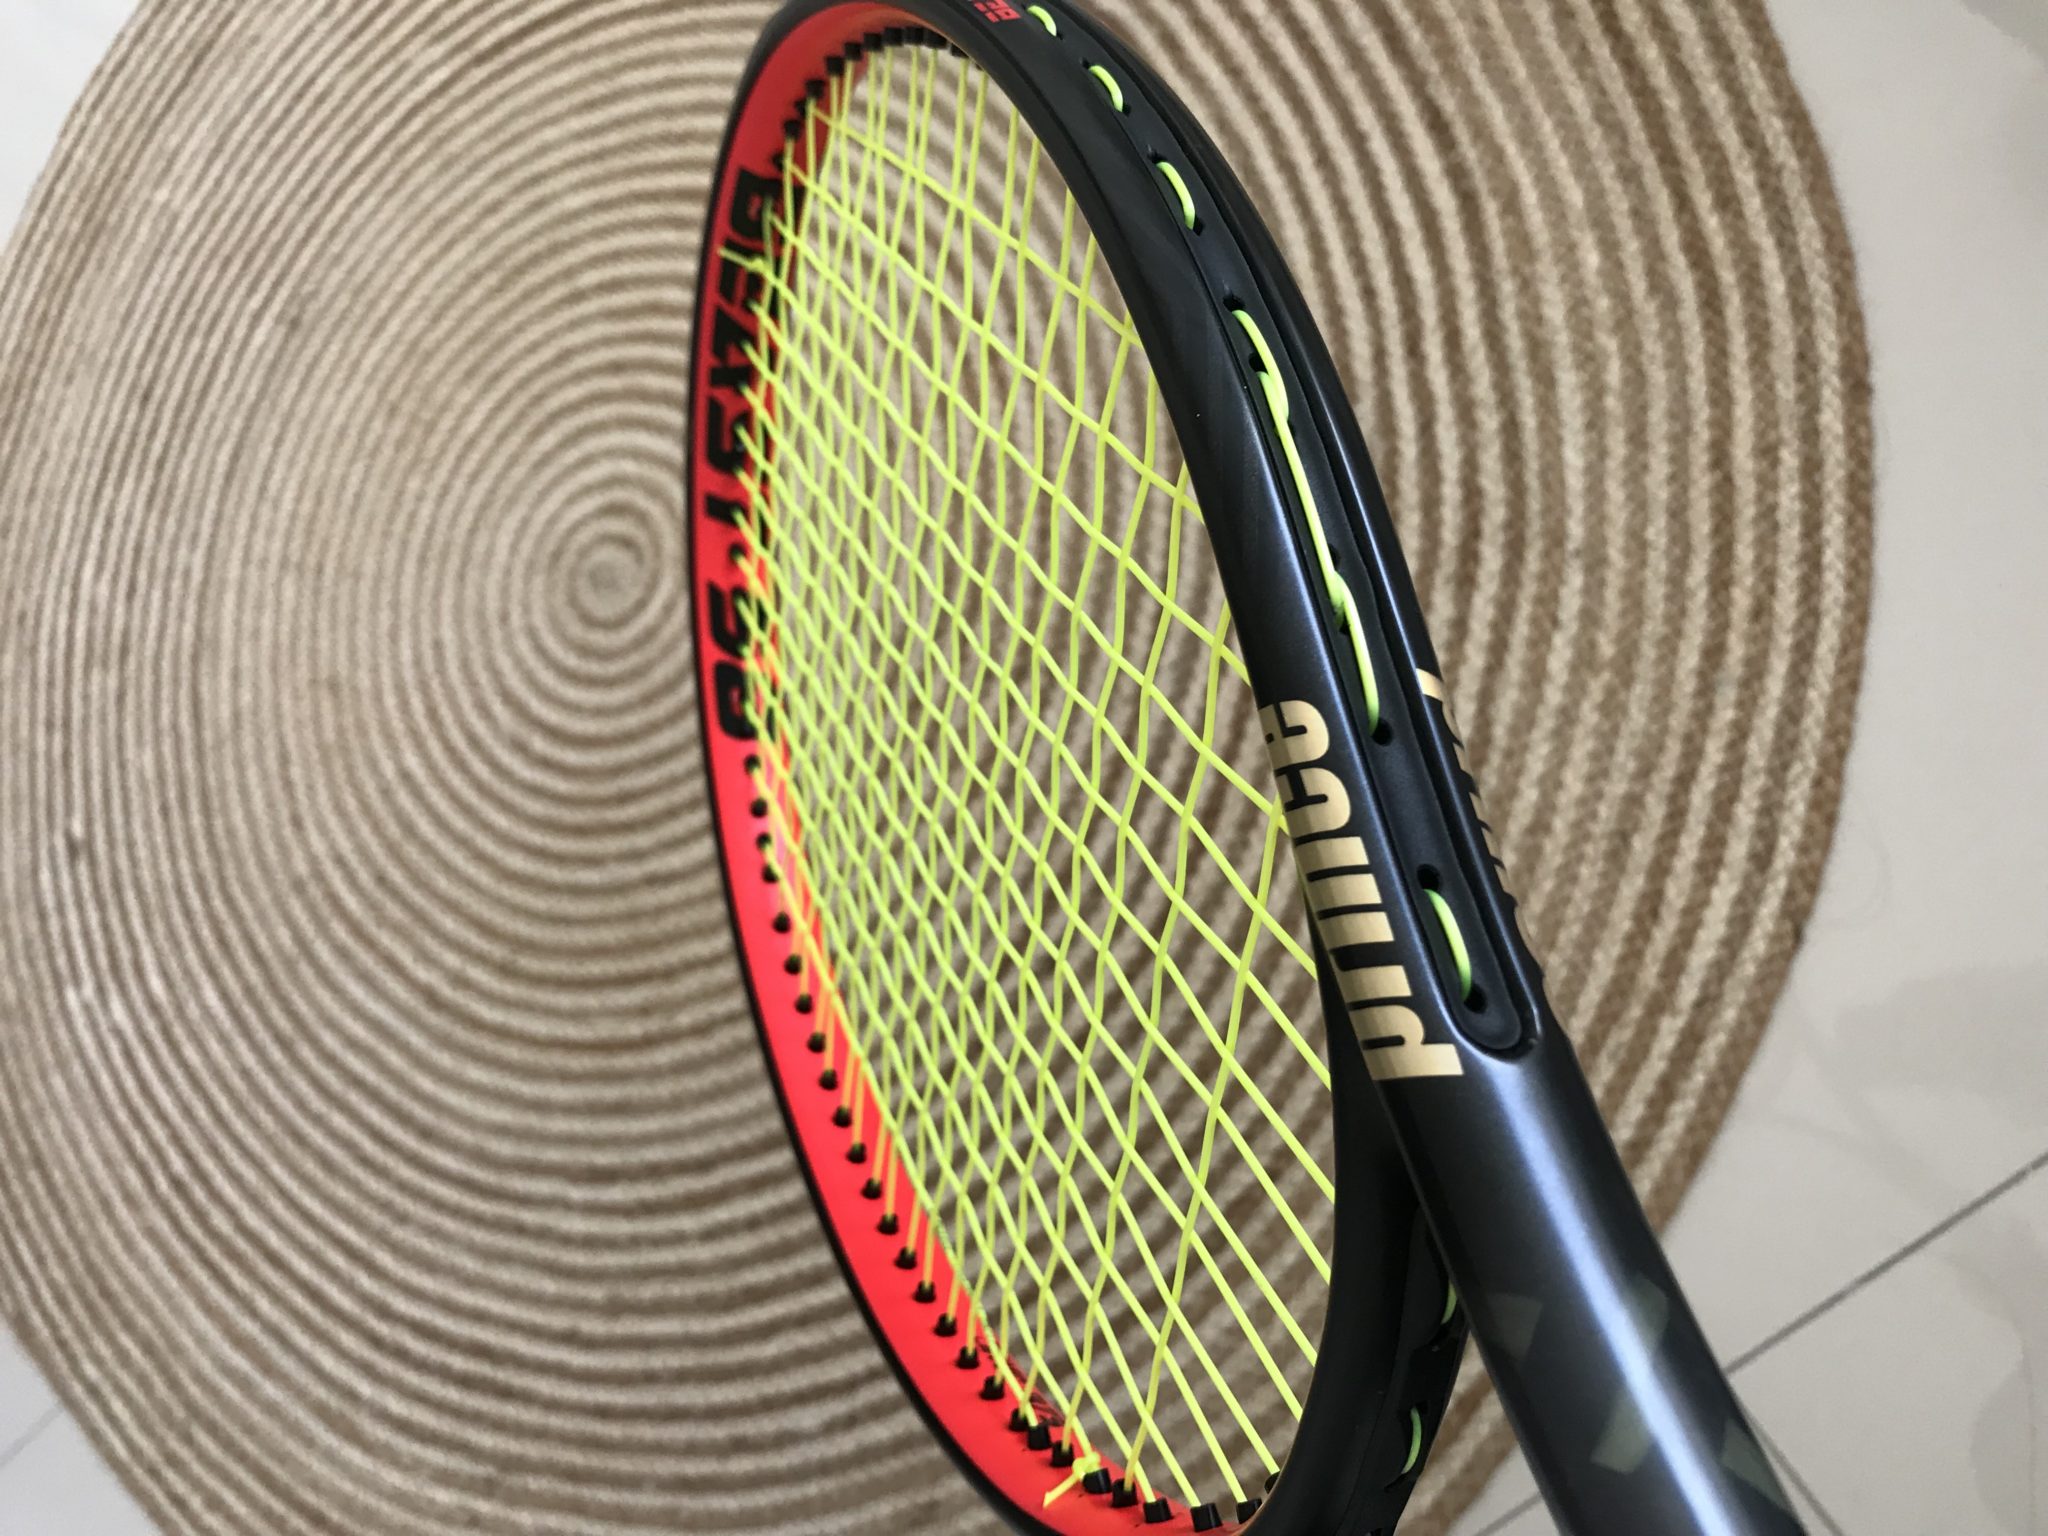 Prince TeXtreme2 Beast O3 100 Adult Tennis Racket